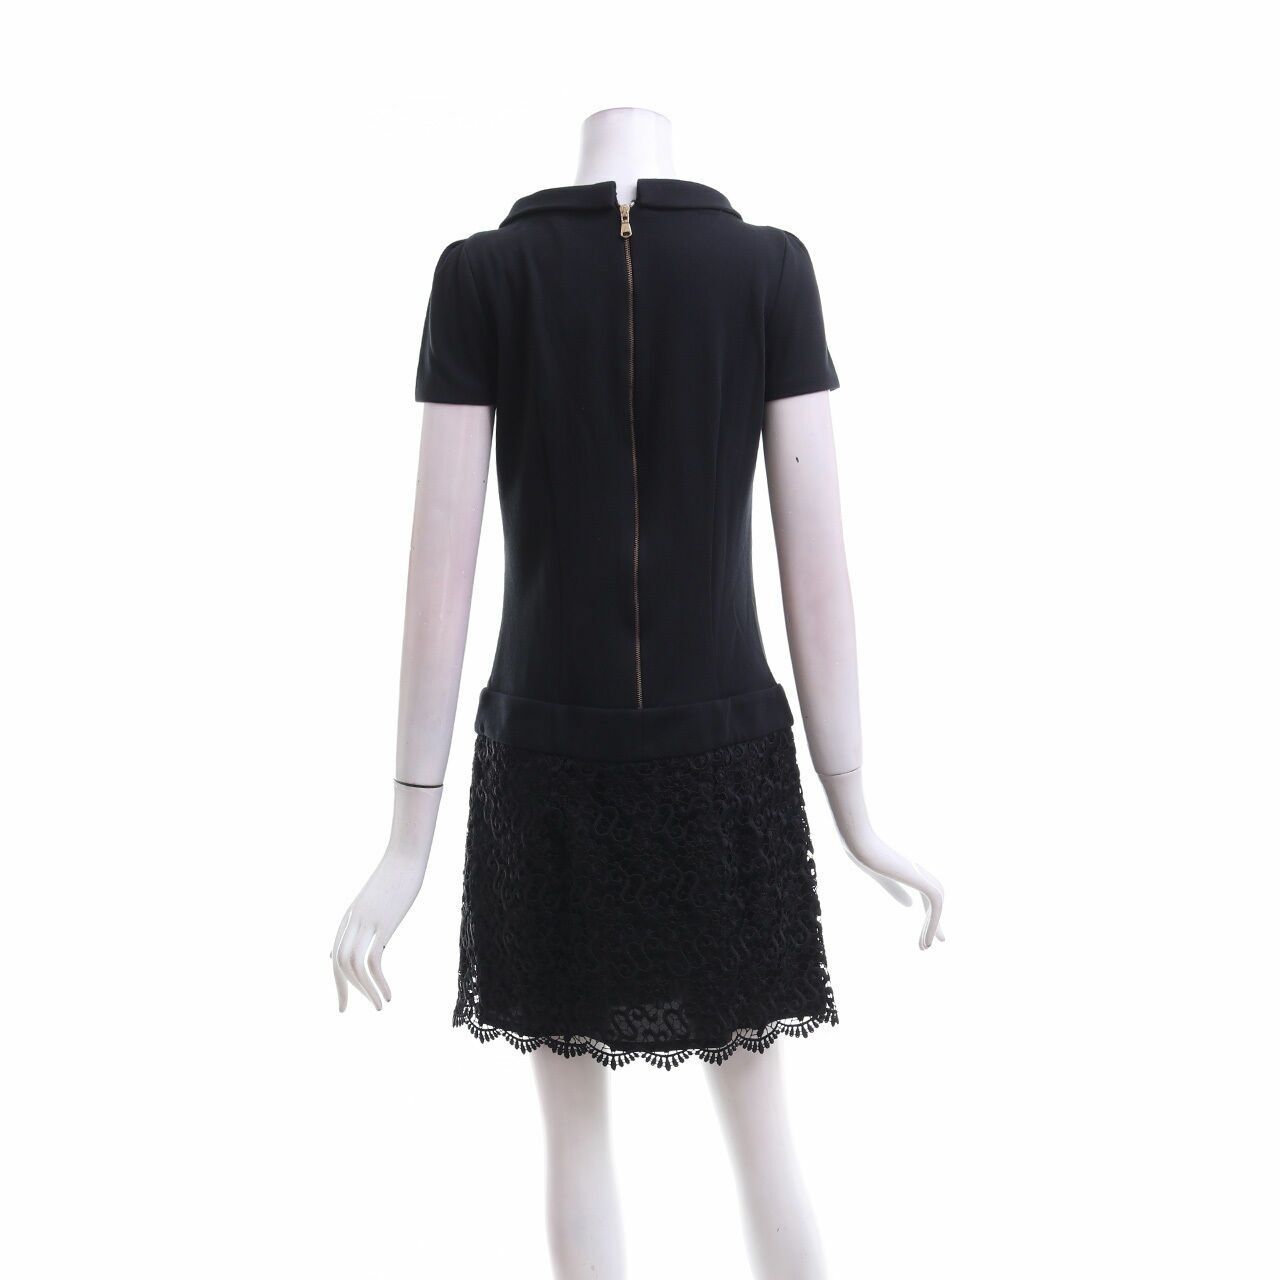 Sinequenone Black Lace Mini Dress